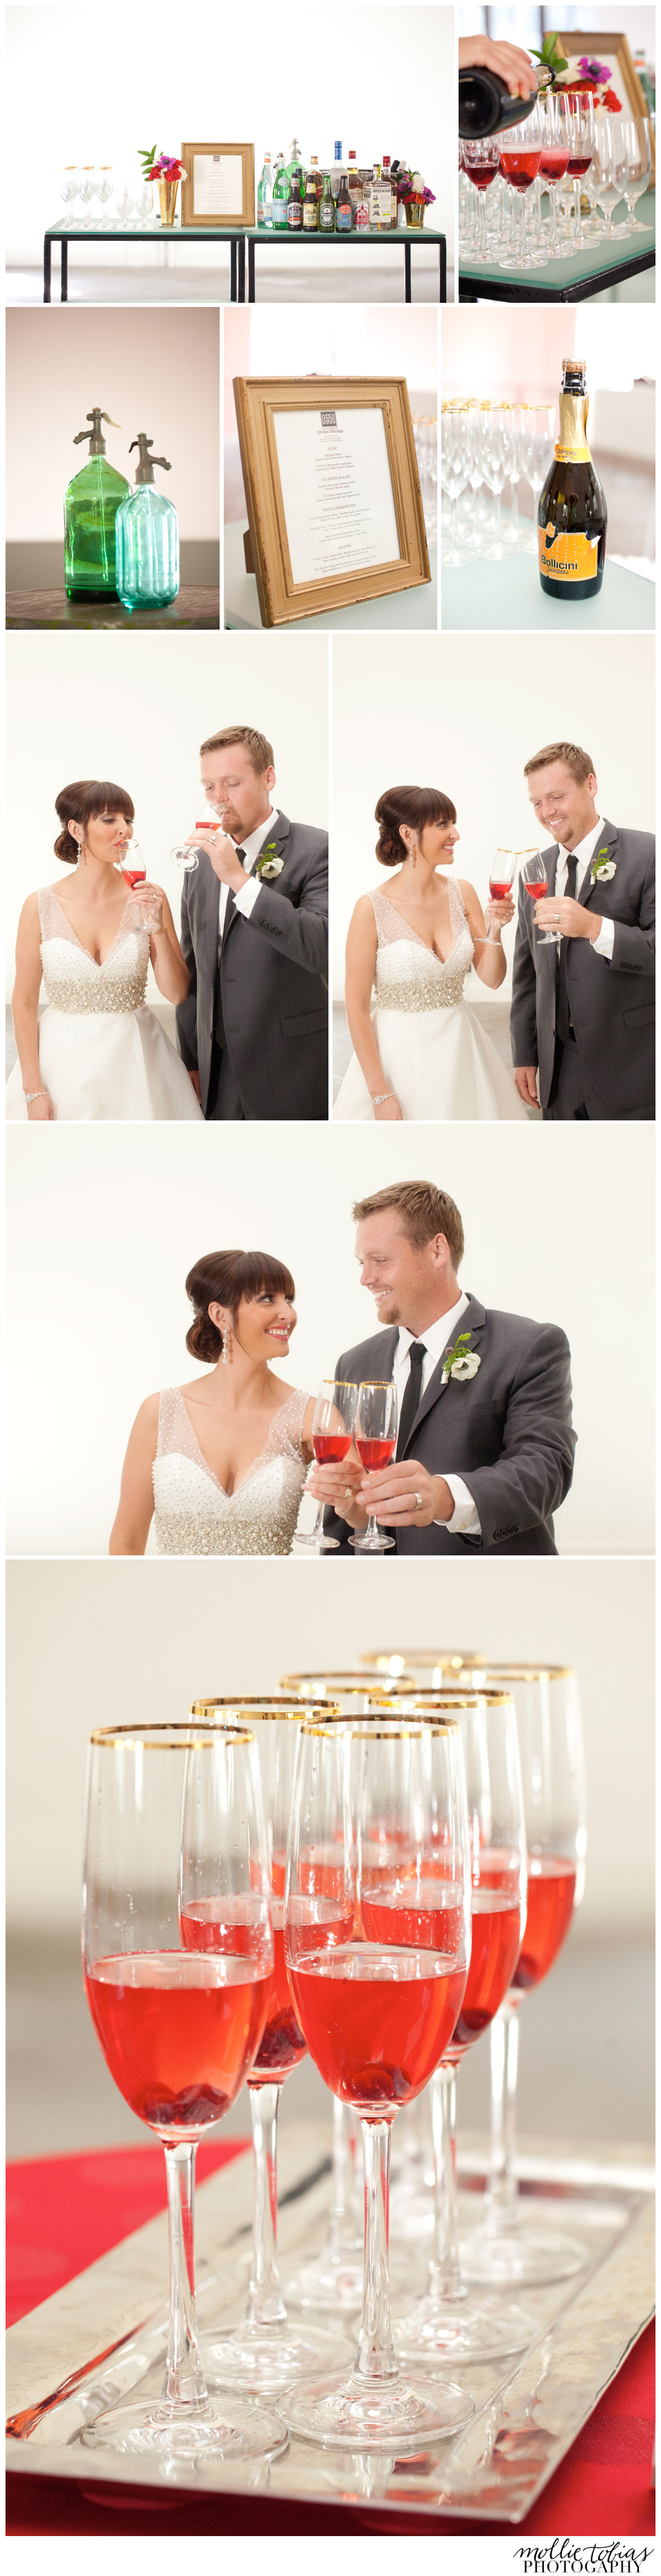 mollie-tobias-VA-MD-DC-wedding-photography-DC-Ladies-styled-shoot-drinks-toast